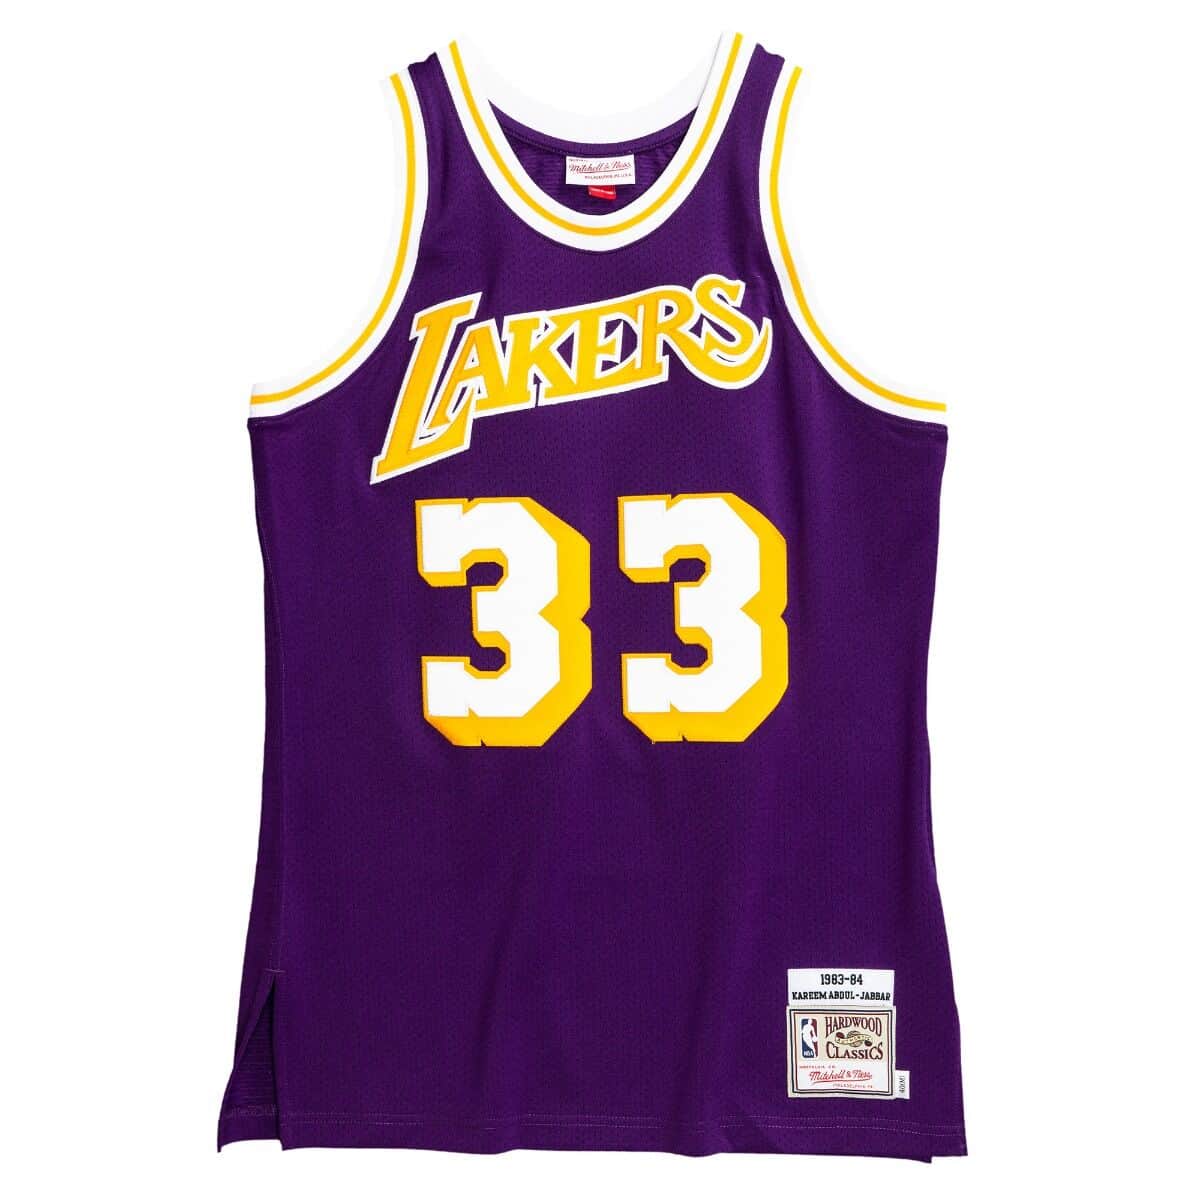 Authentic Jersey Los Angeles Lakers 1983-84 Kareem Abdul-Jabbar